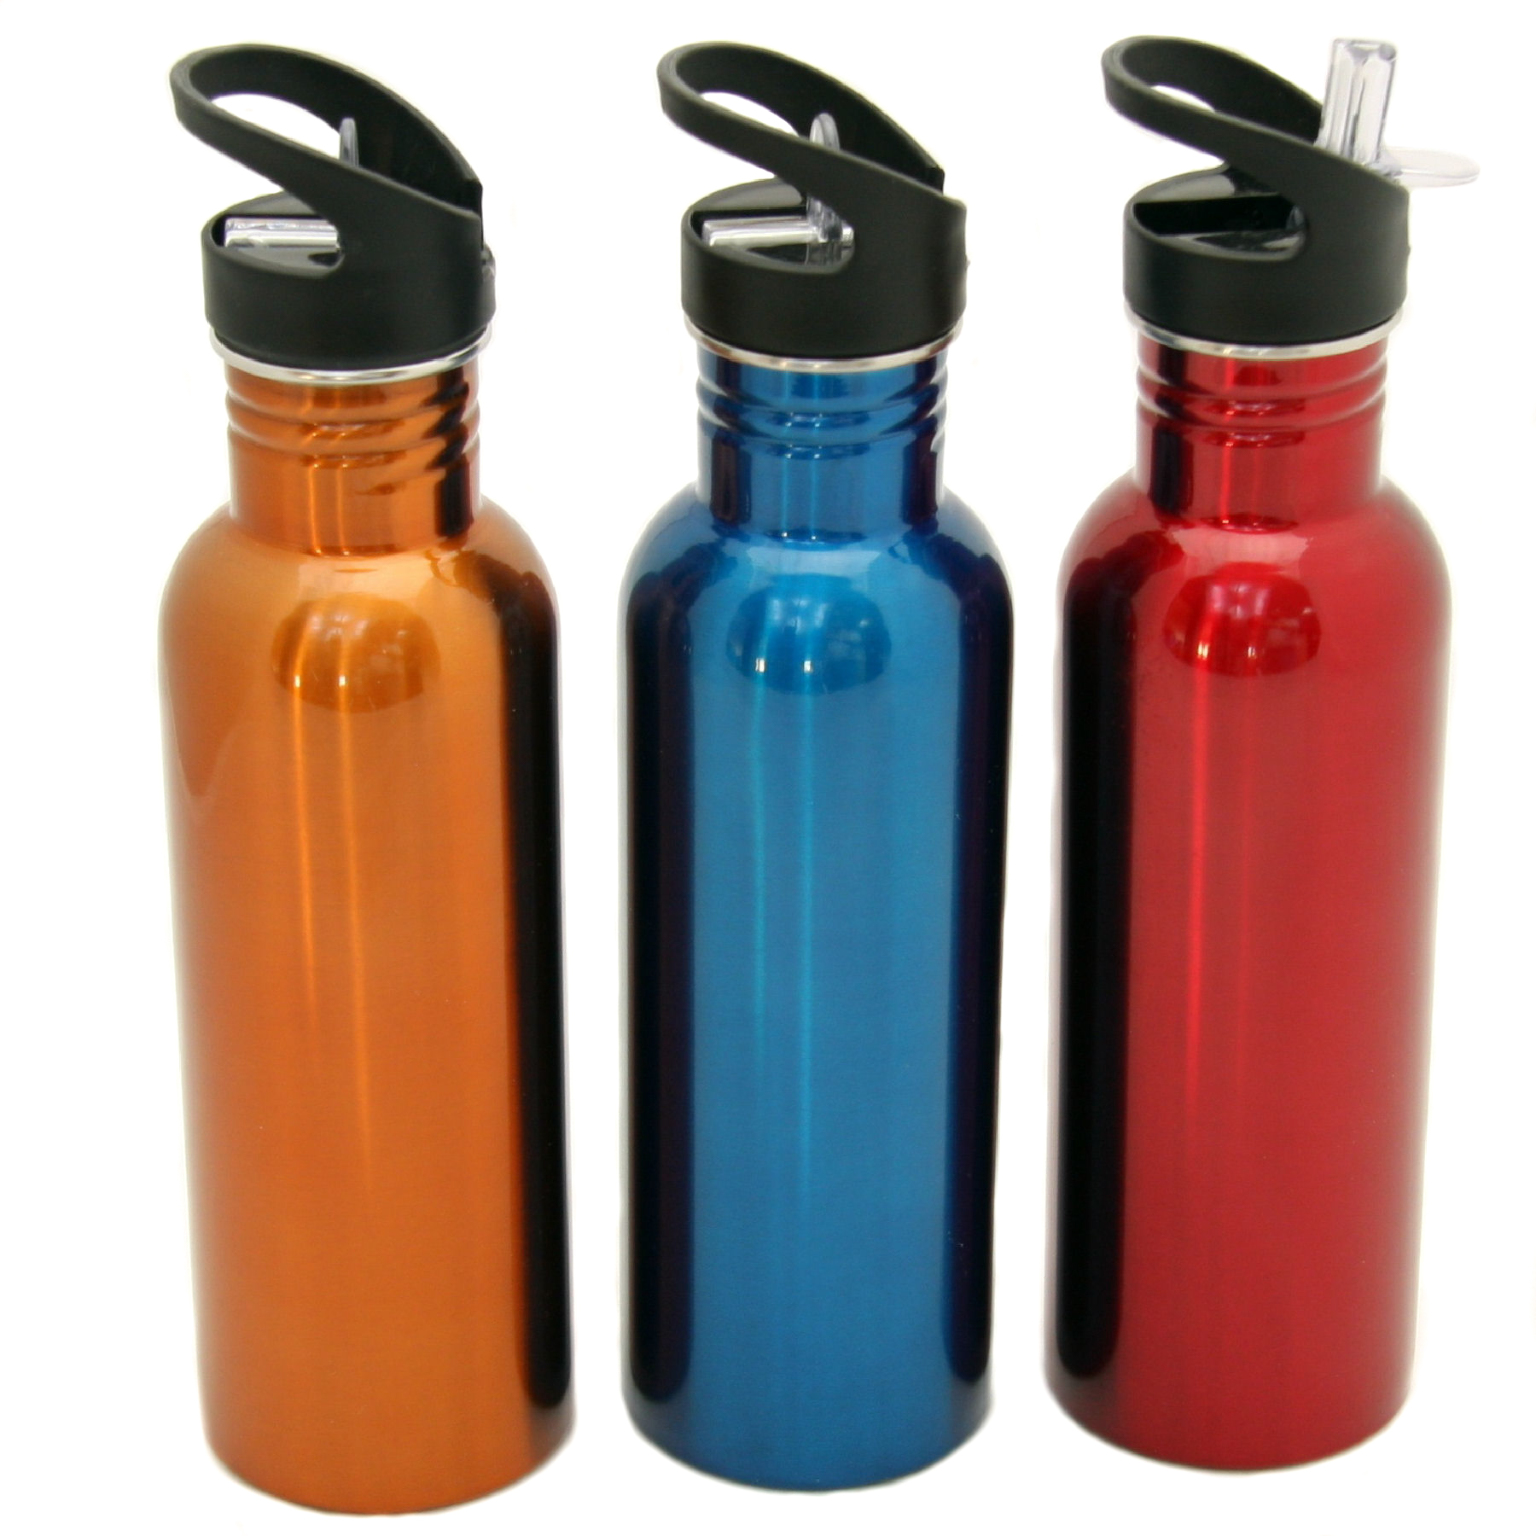 Stainless steel hydration bottle